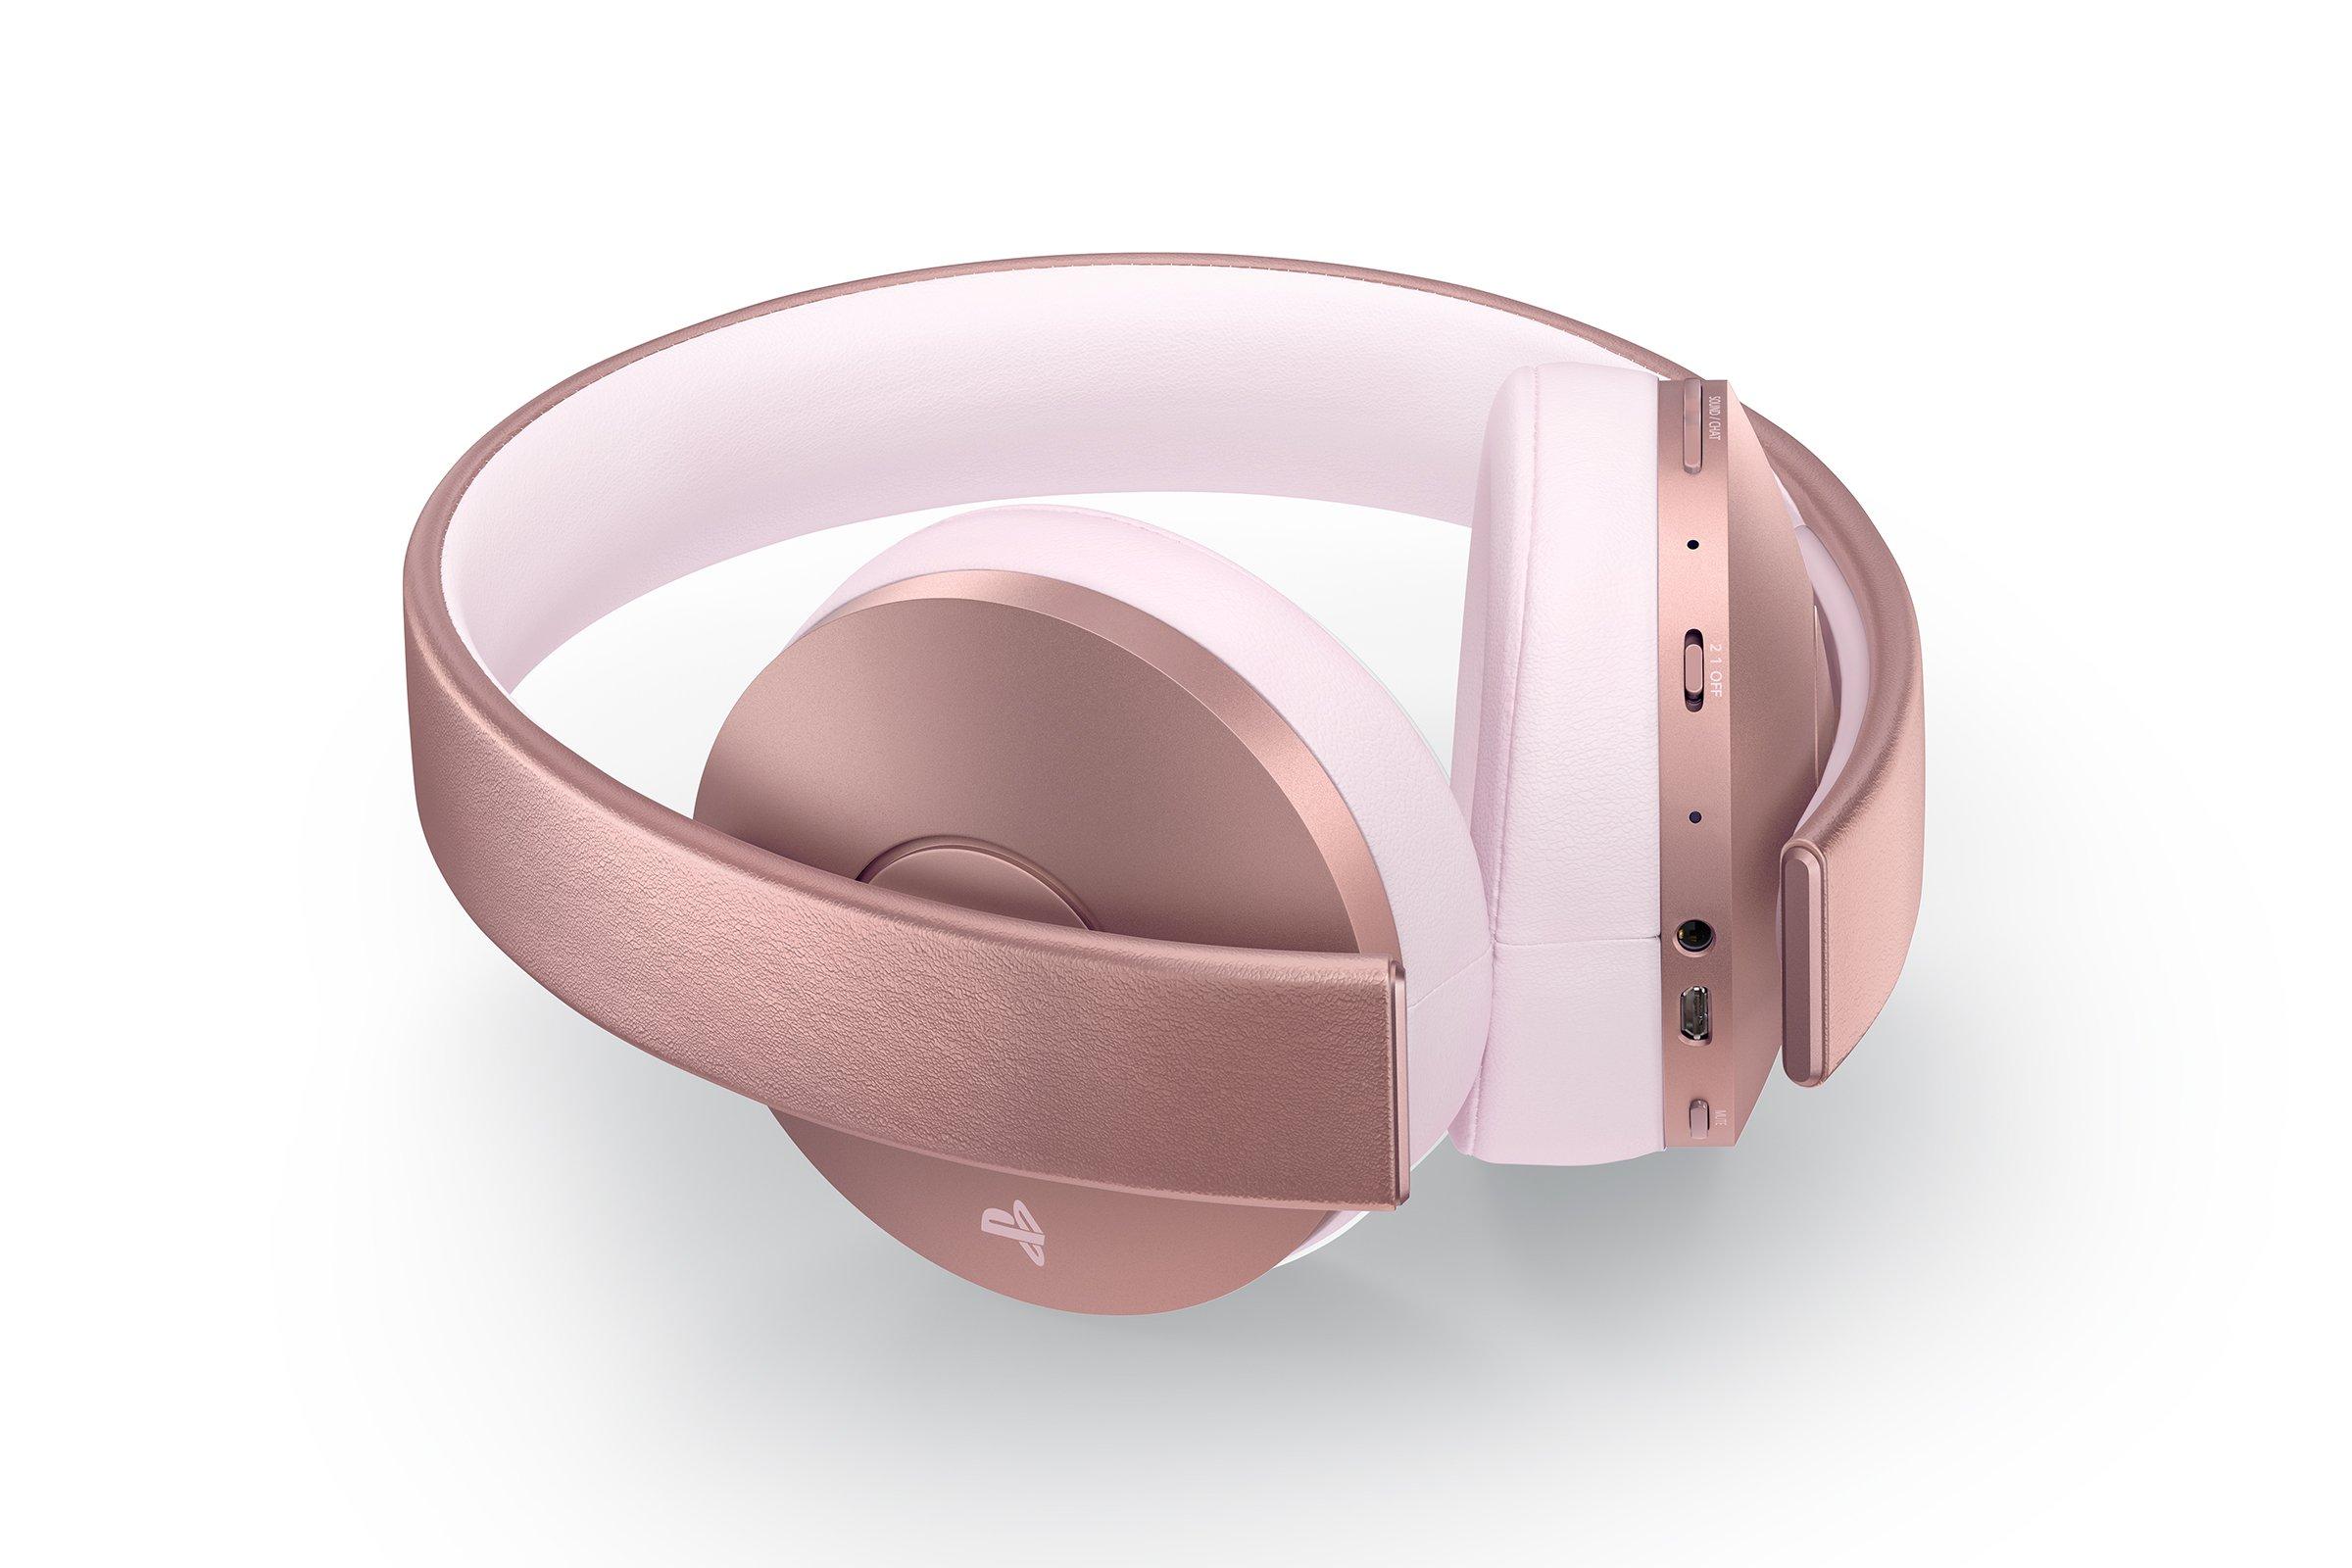 sony rose gold wireless headset